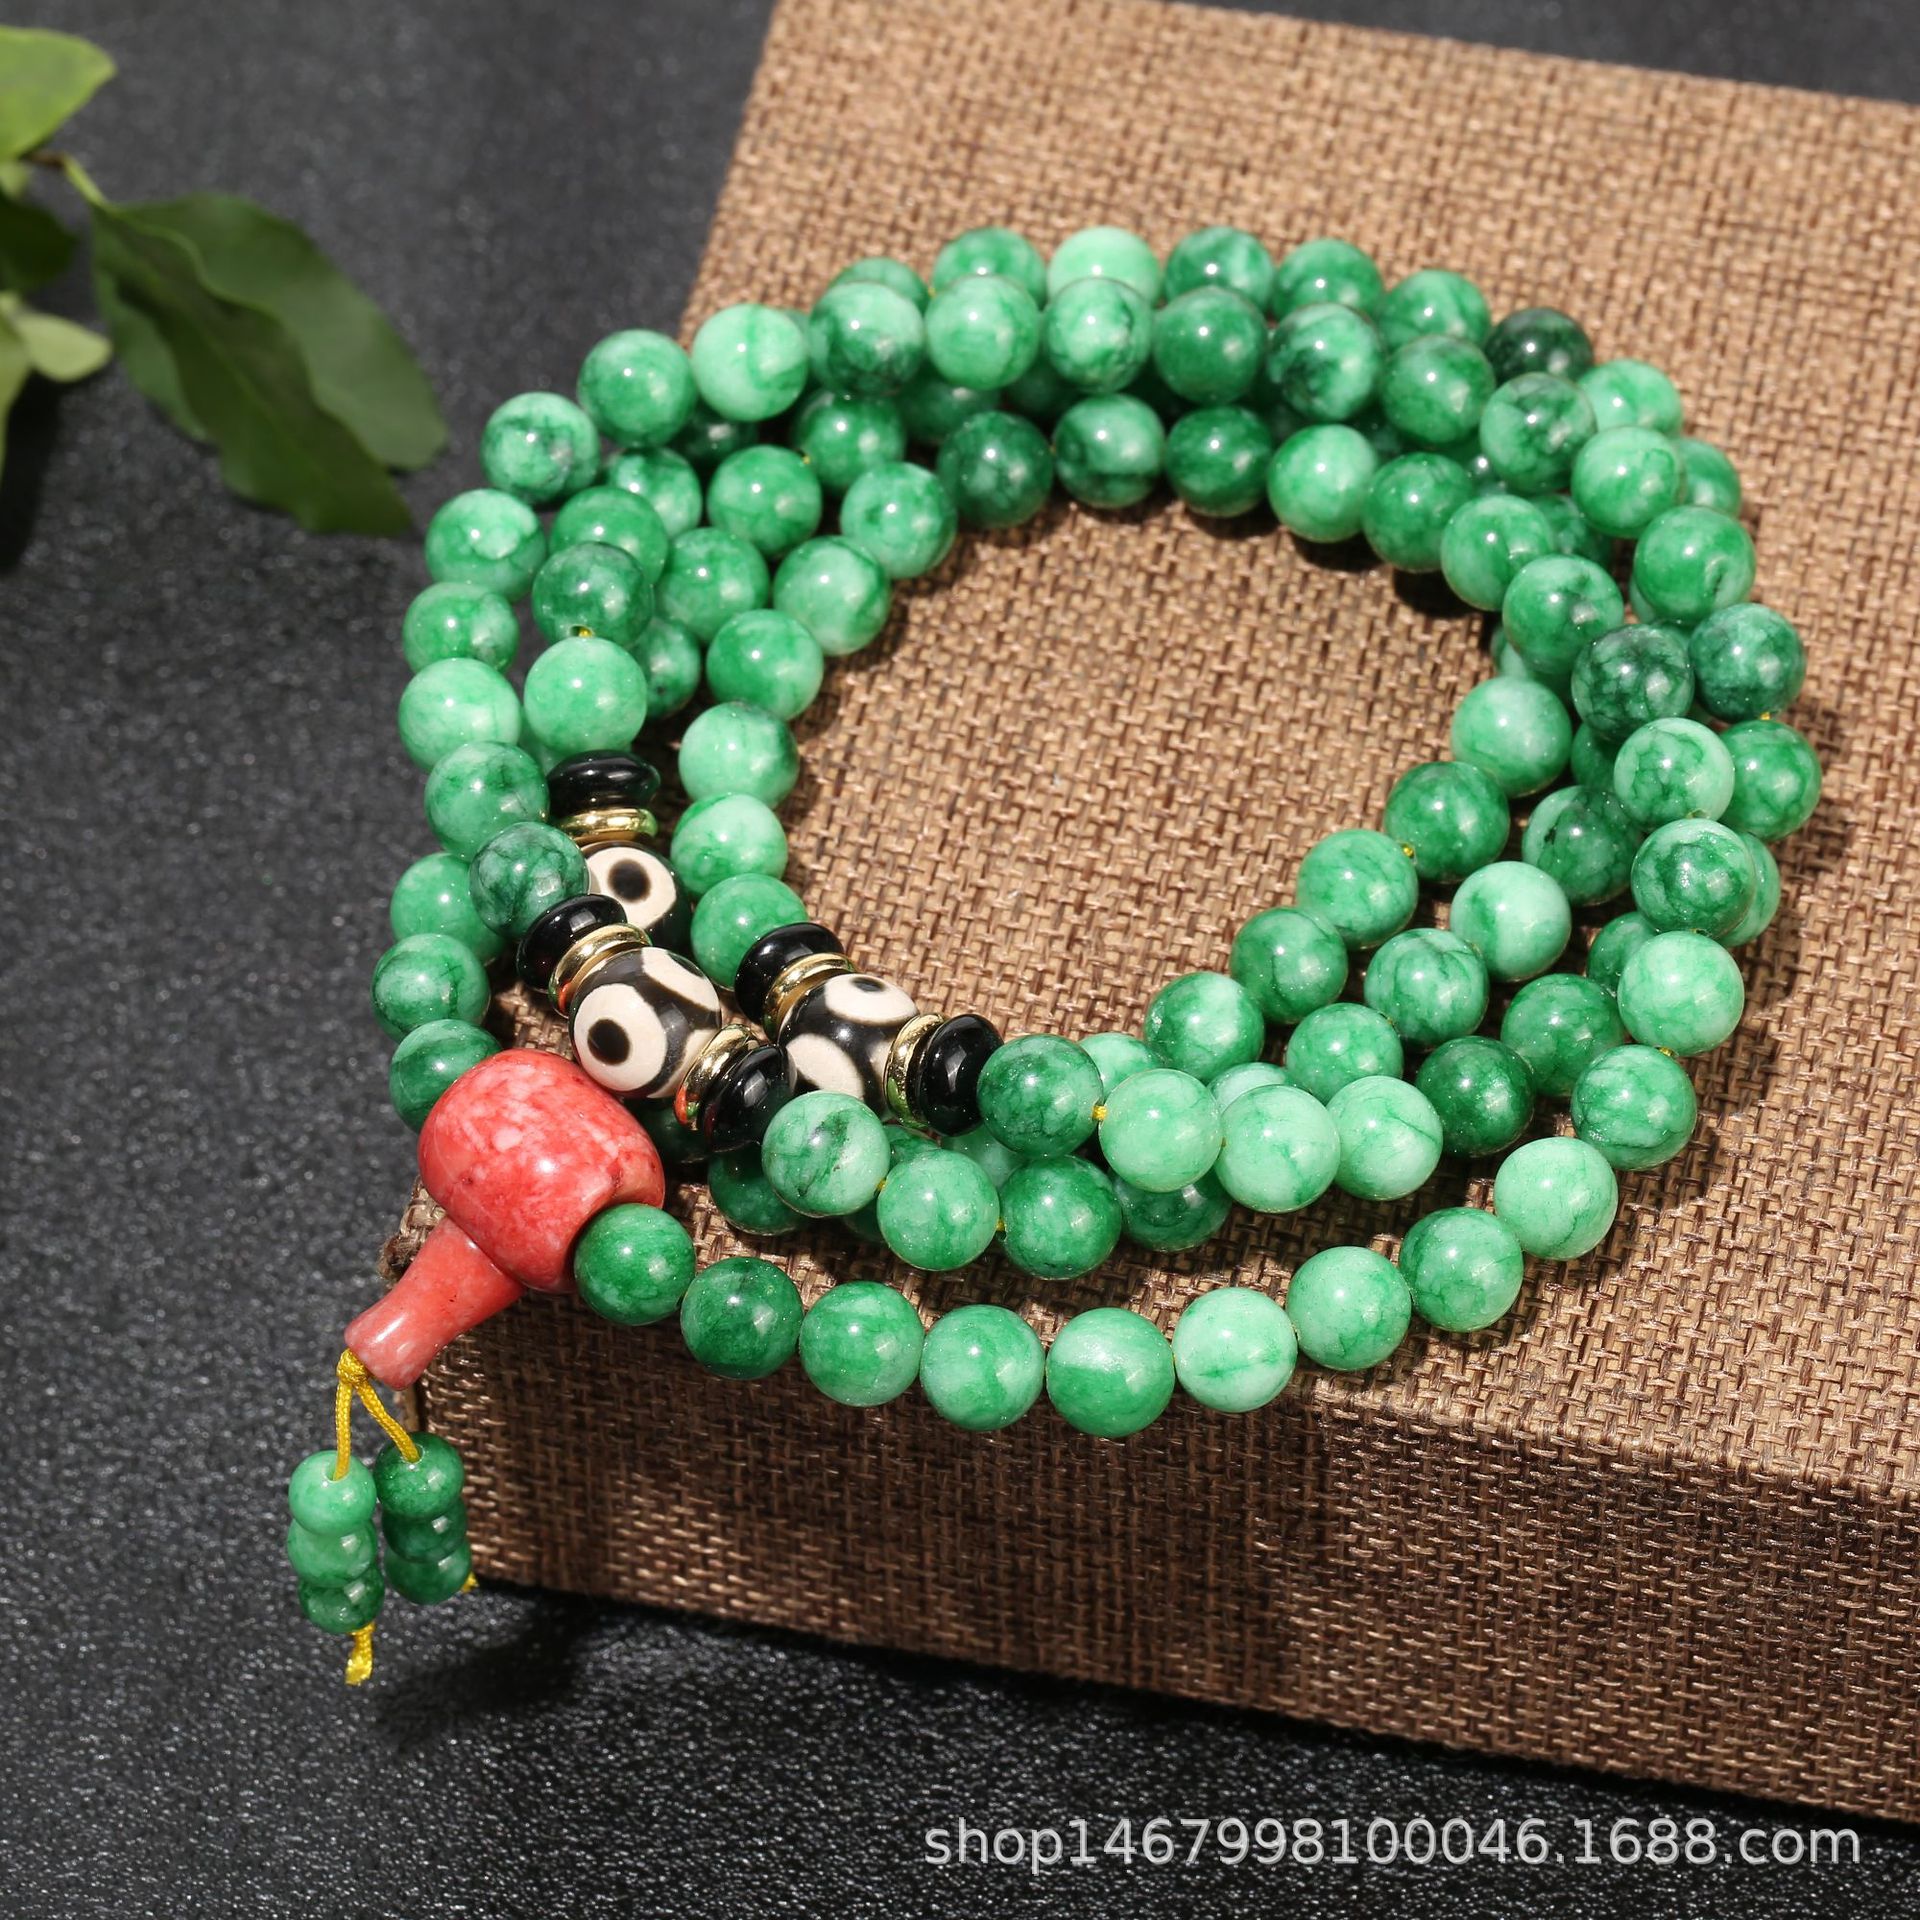 4:Green jade and Tibetan aagate beads